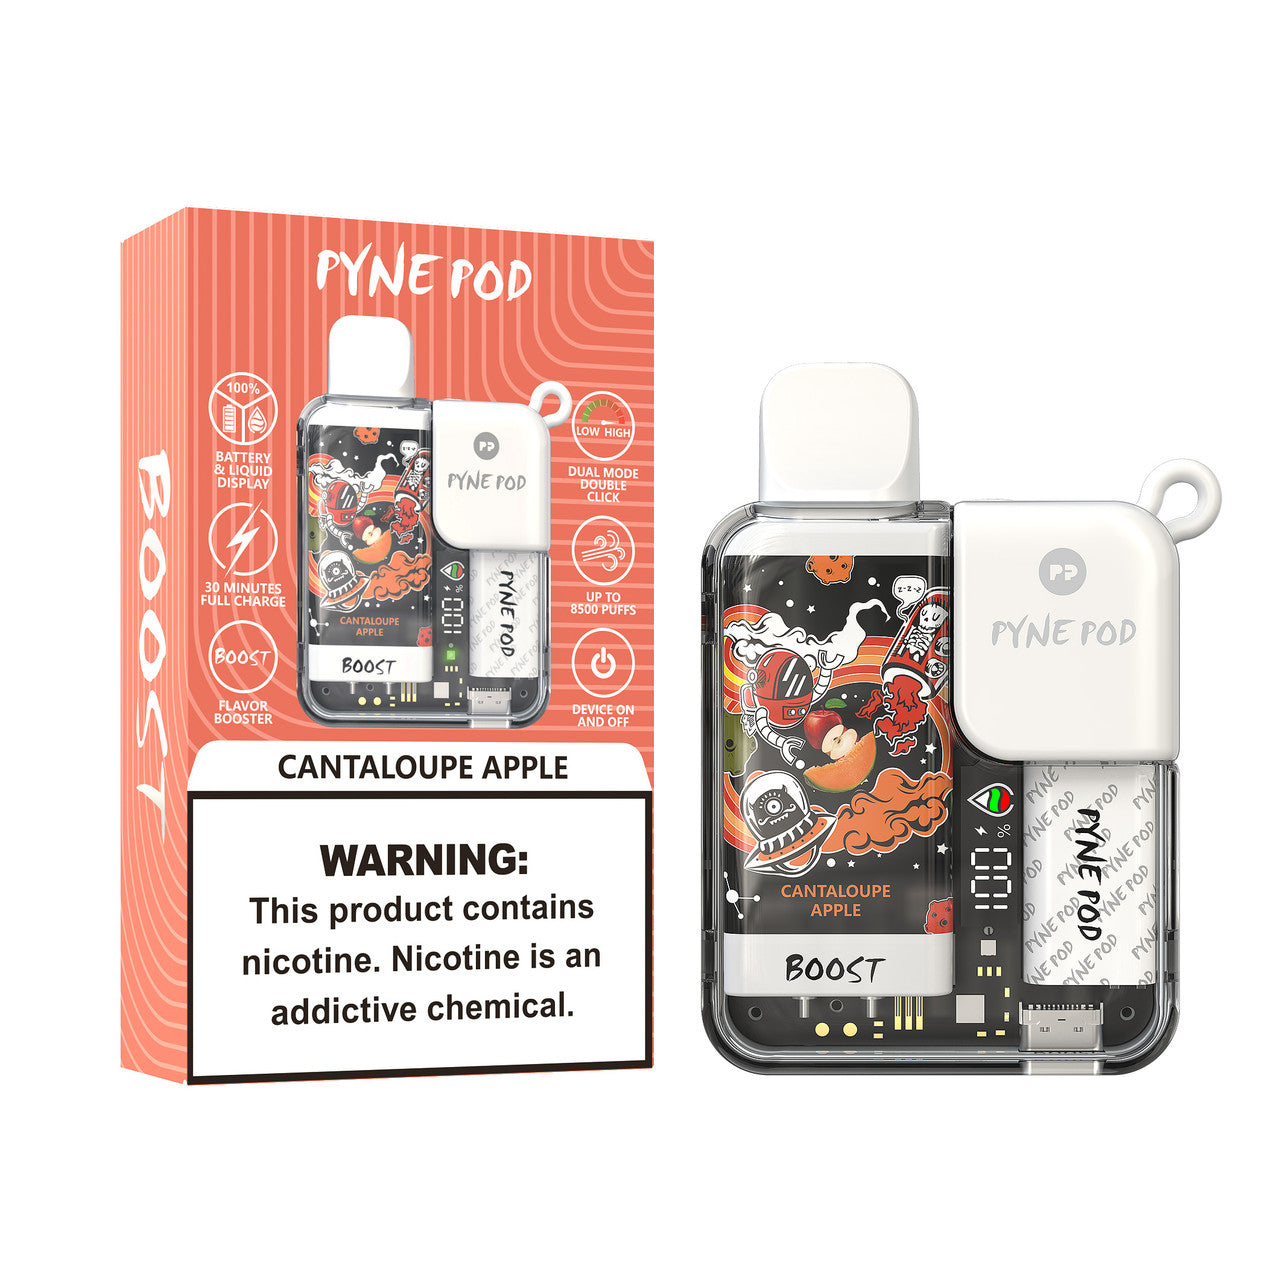 Pyne-Pod-Boost-8500-Cantaloupe-Apple-2-1280x1280-JPG